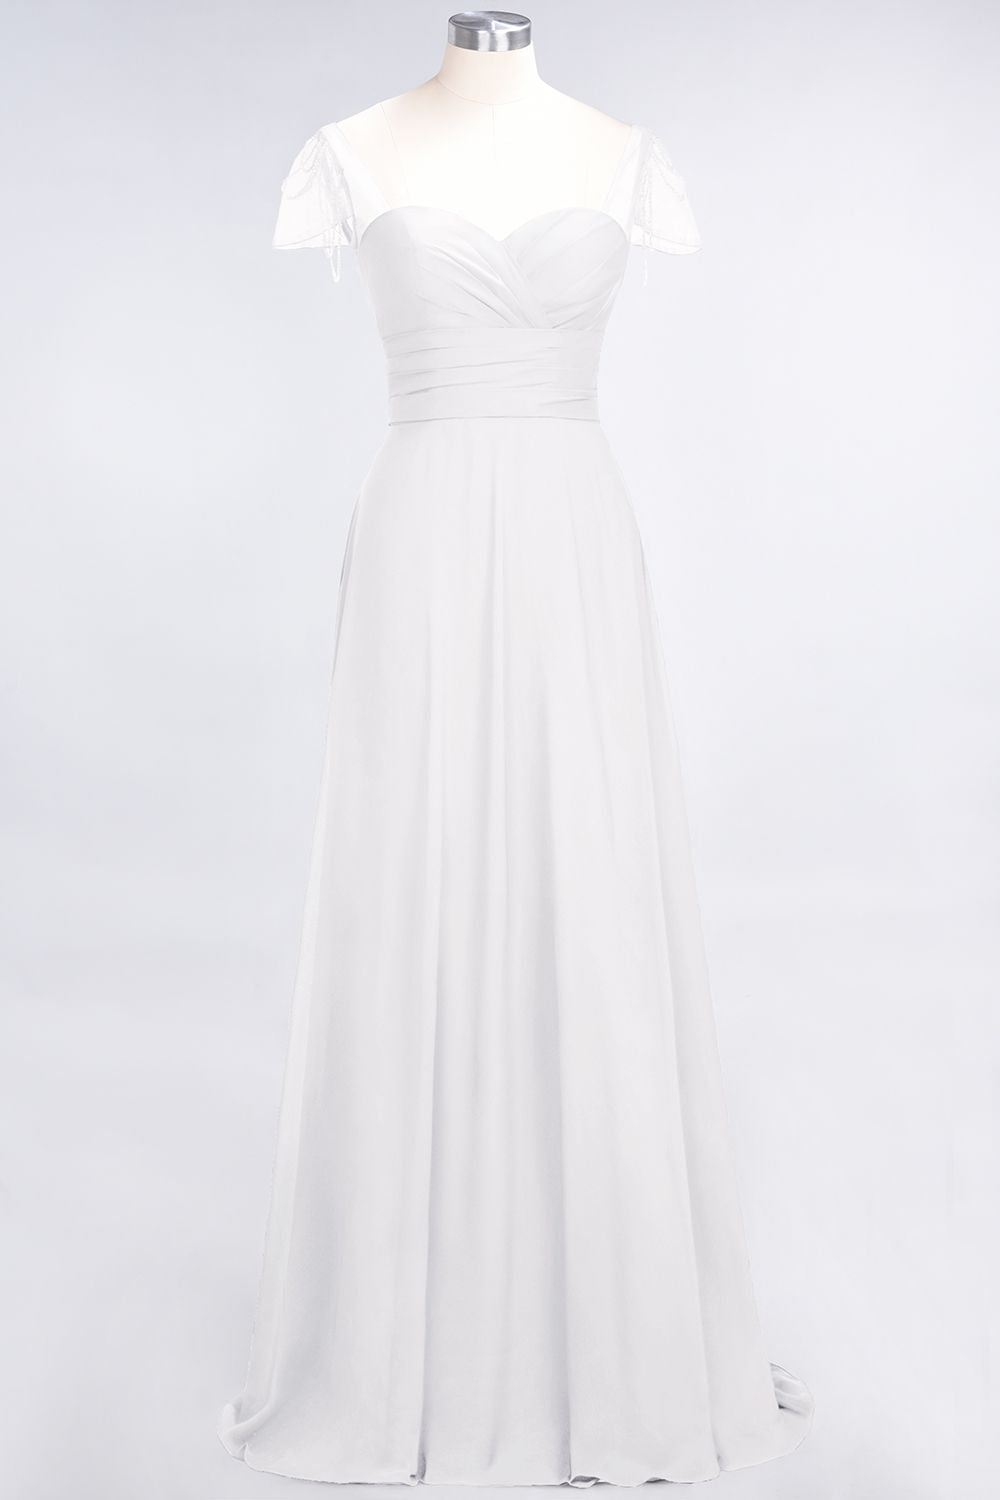 A-Line Chiffon Sweetheart Ruffle Long Bridesmaid Dress with Beadings-BIZTUNNEL